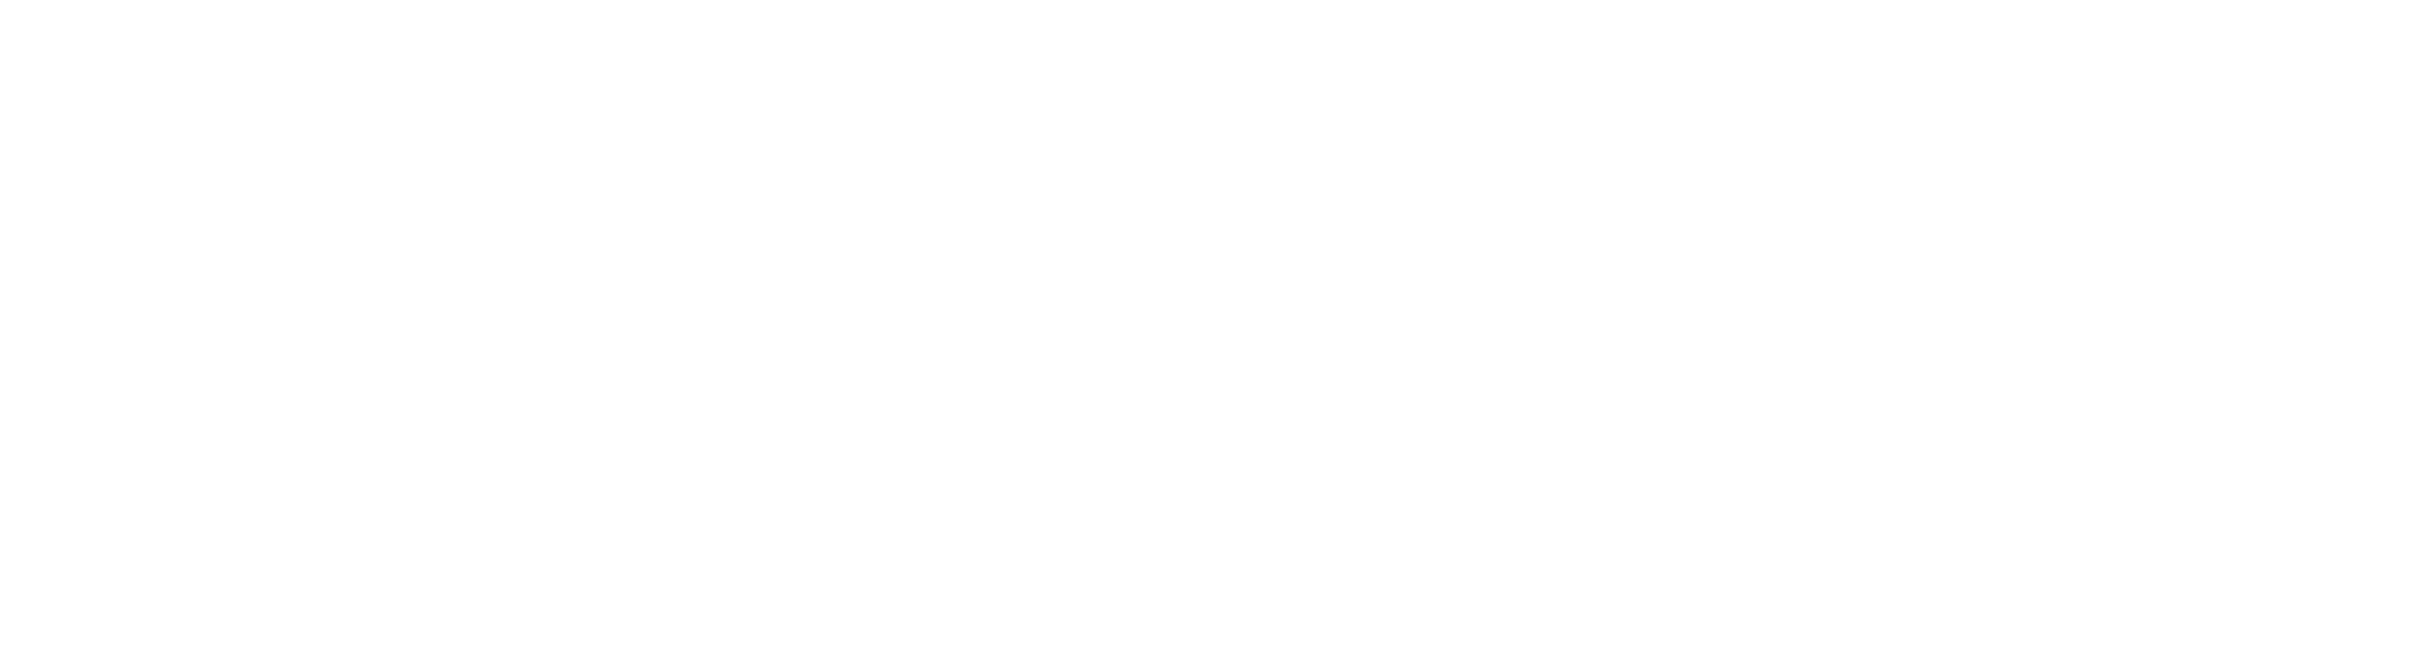 Graphene Week 2022